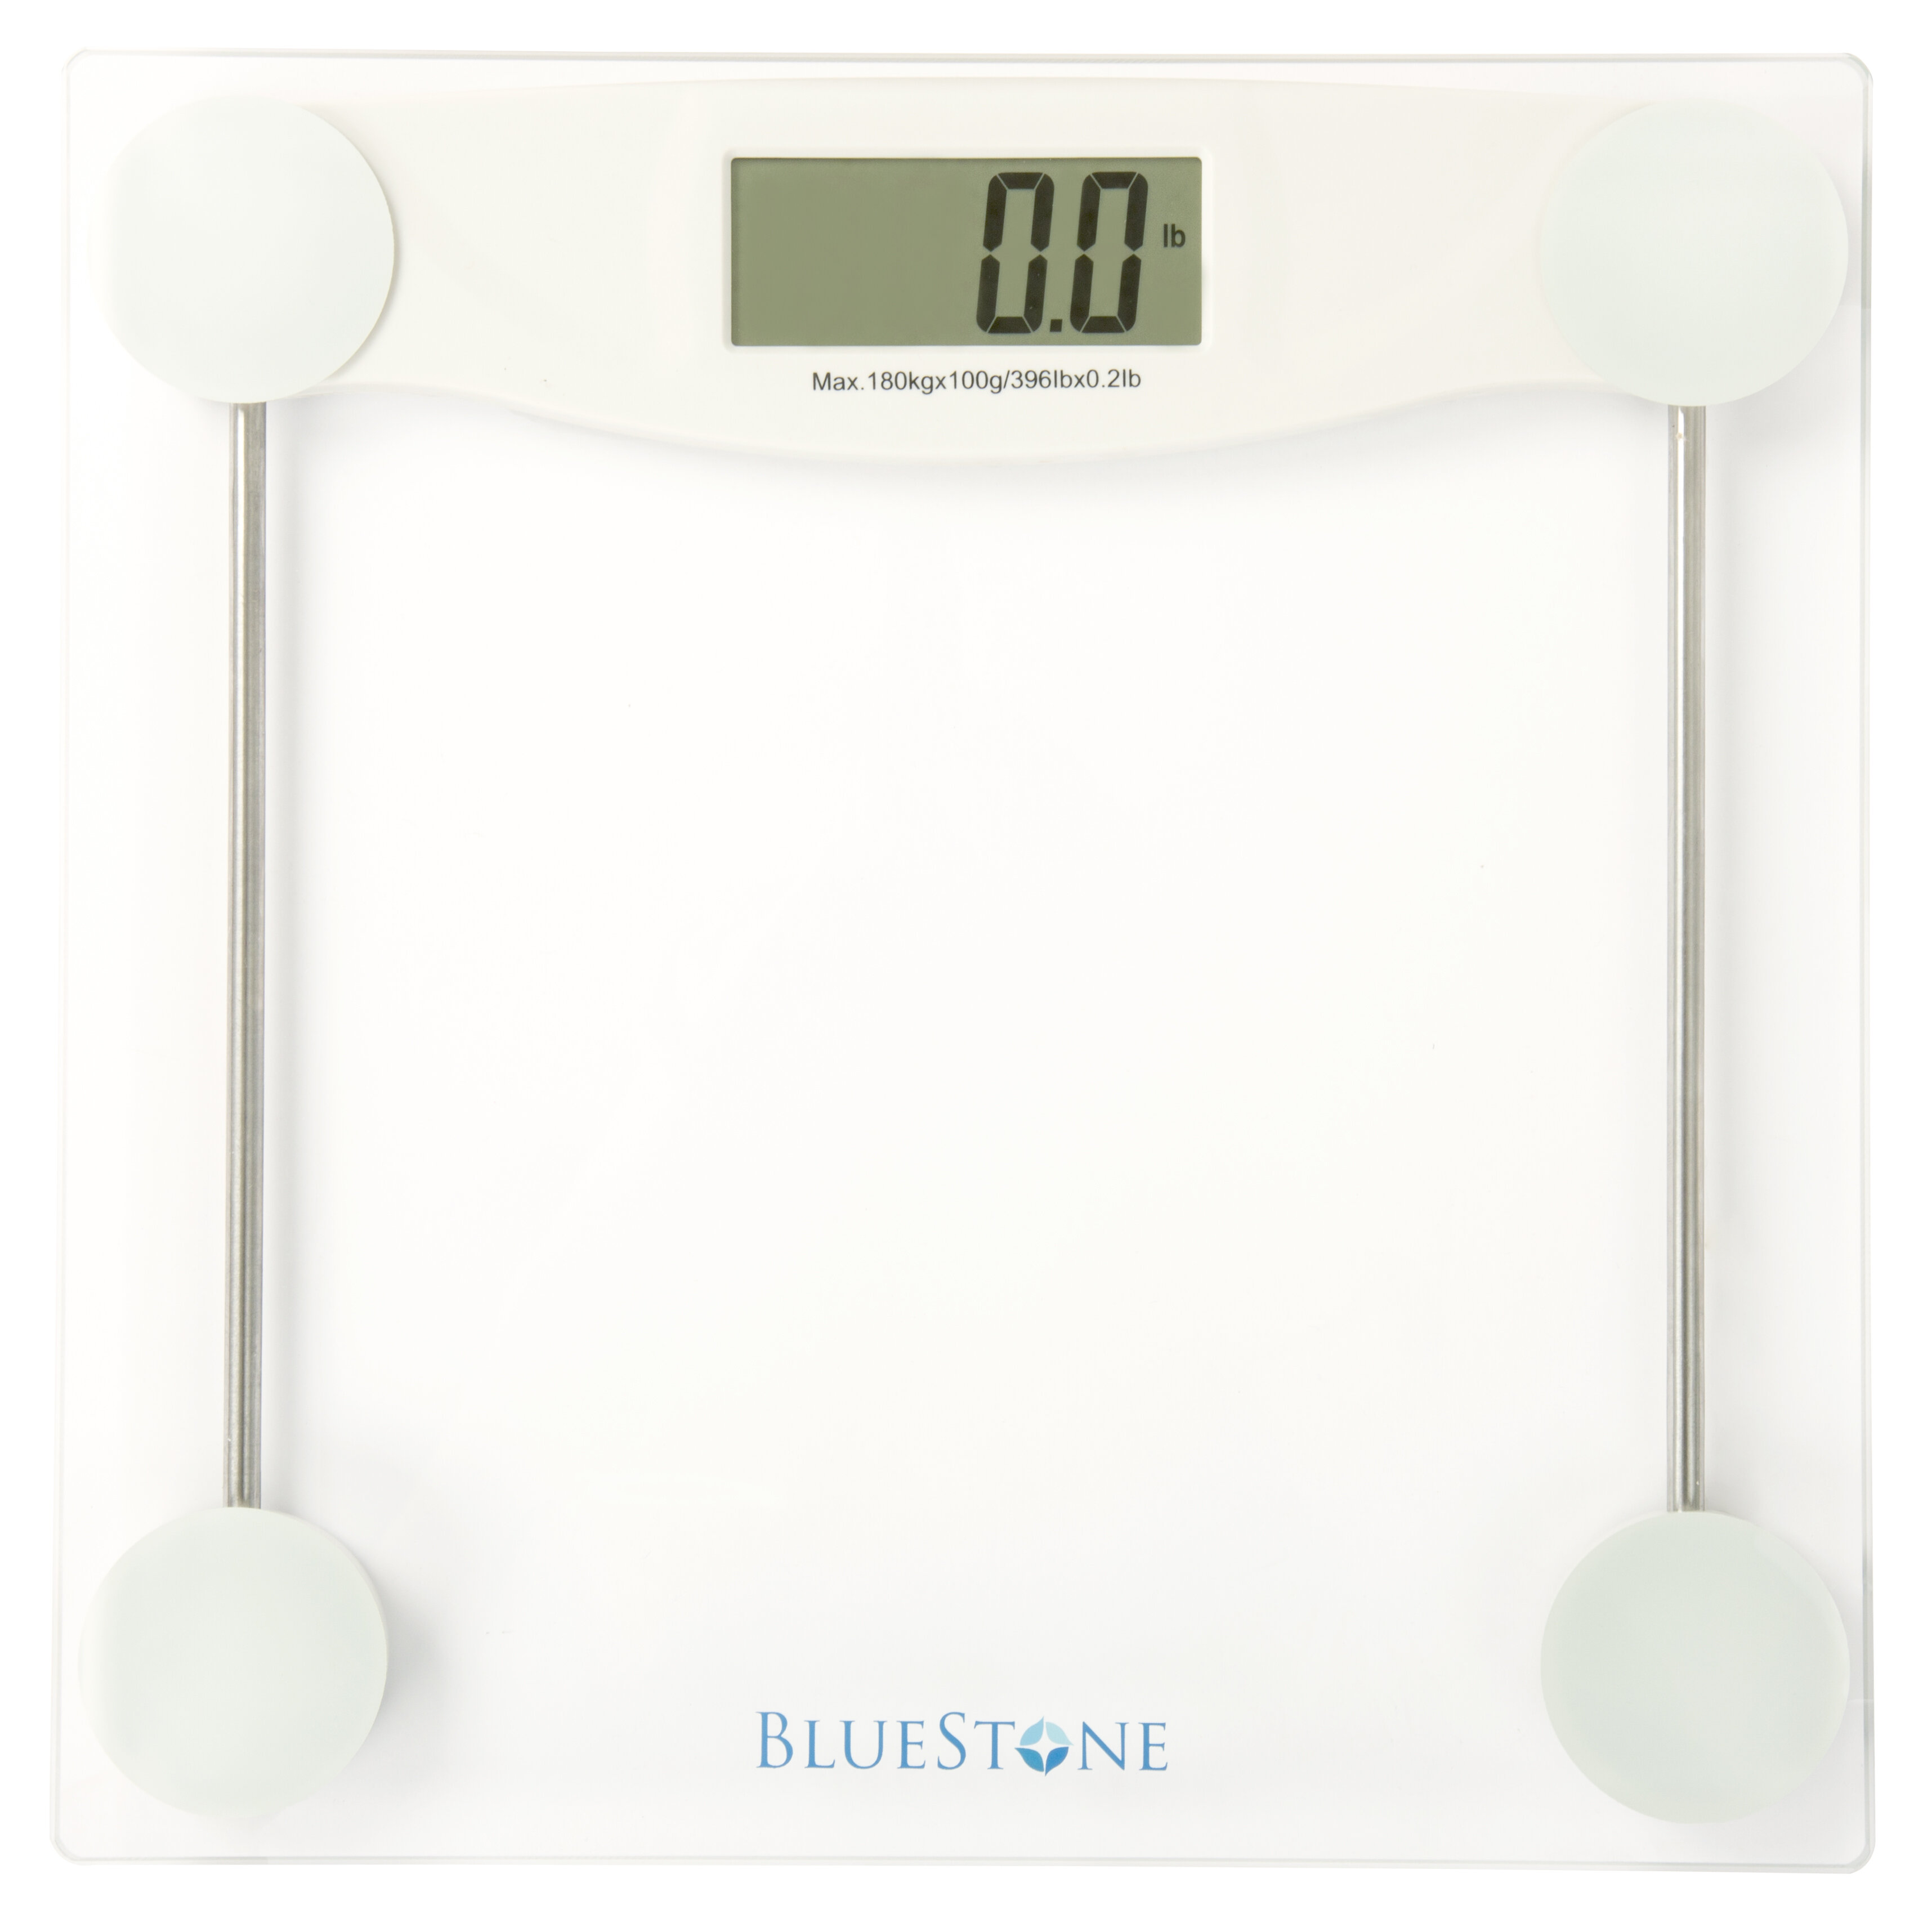 Etekcity - Troubleshooting Digital Body Weight Scales 